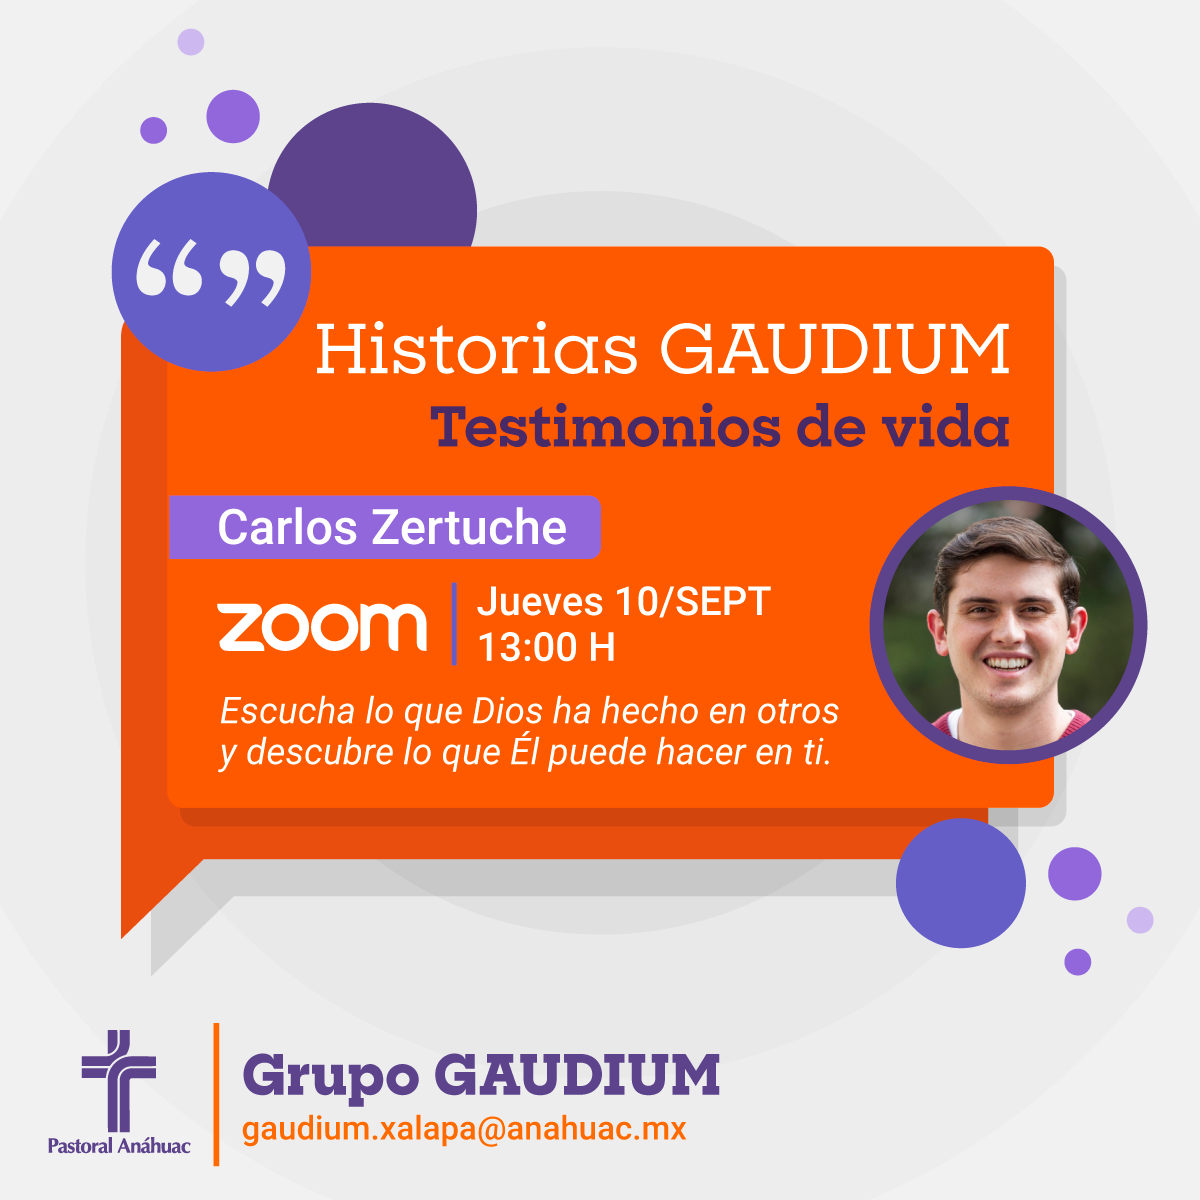 Historias Gaudium: Carlos Zertuche